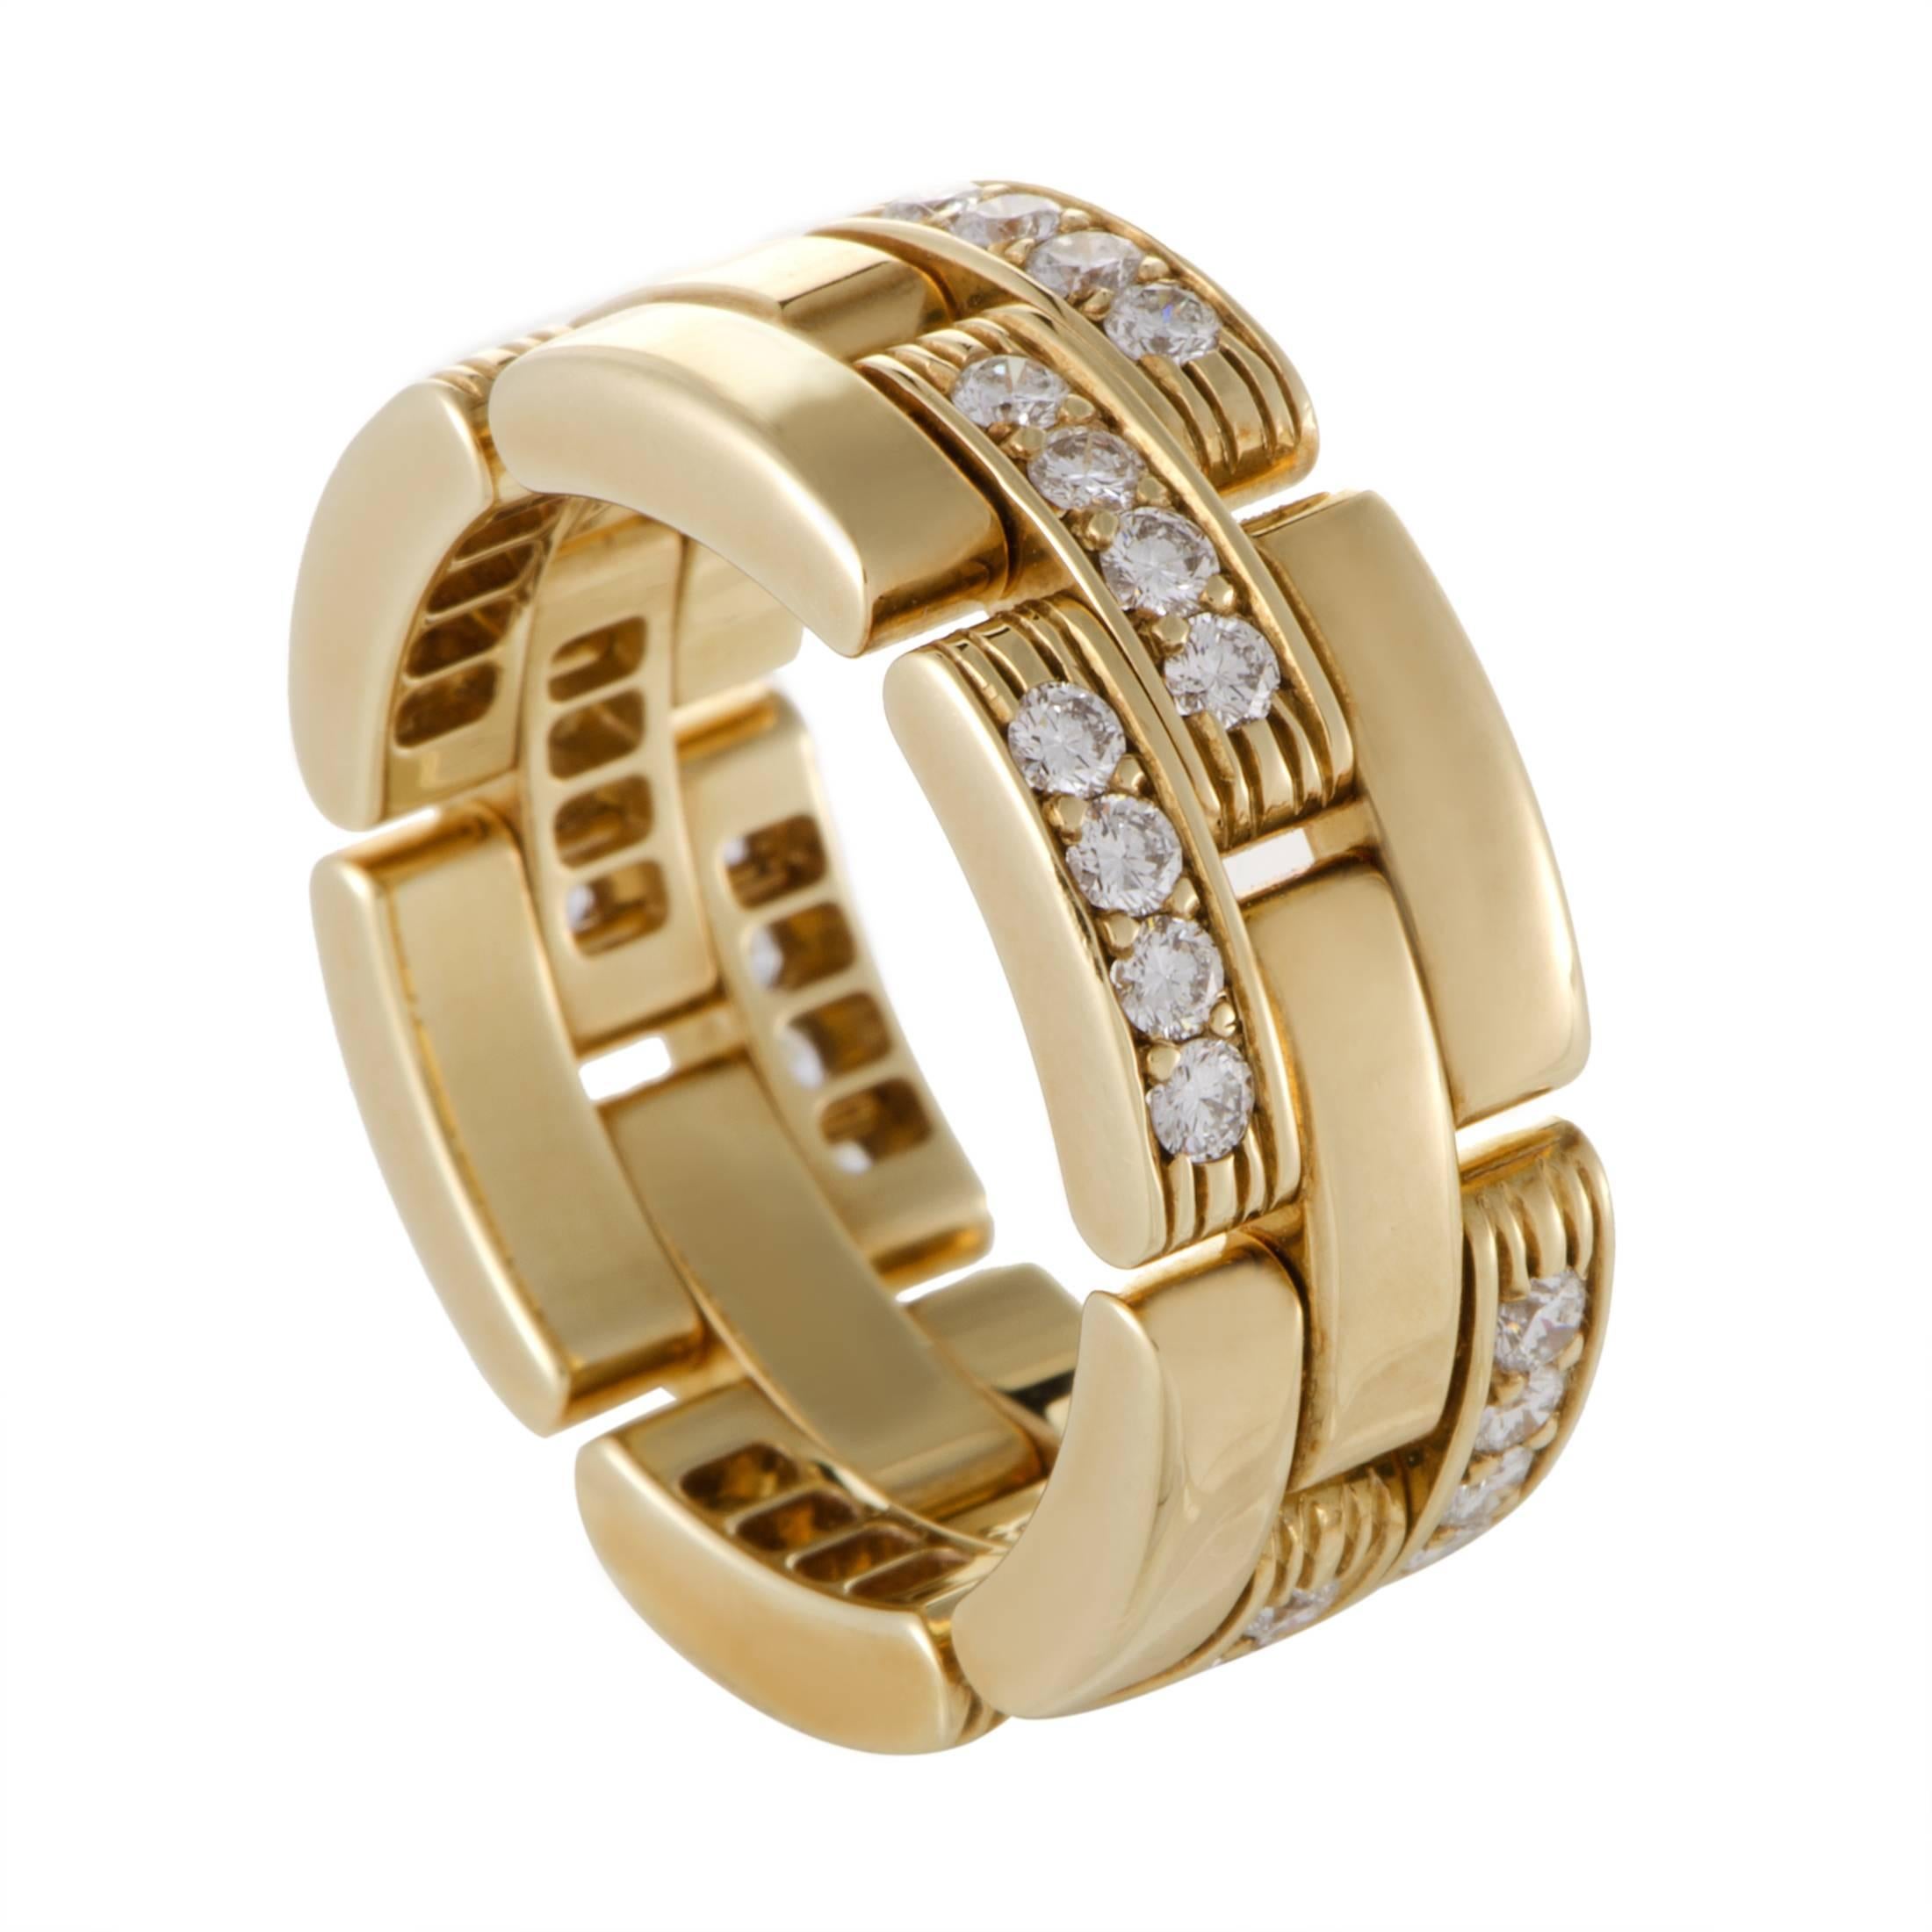 Cartier Maillon Panthere Women’s 18 Karat Yellow Gold Diamond Band Ring